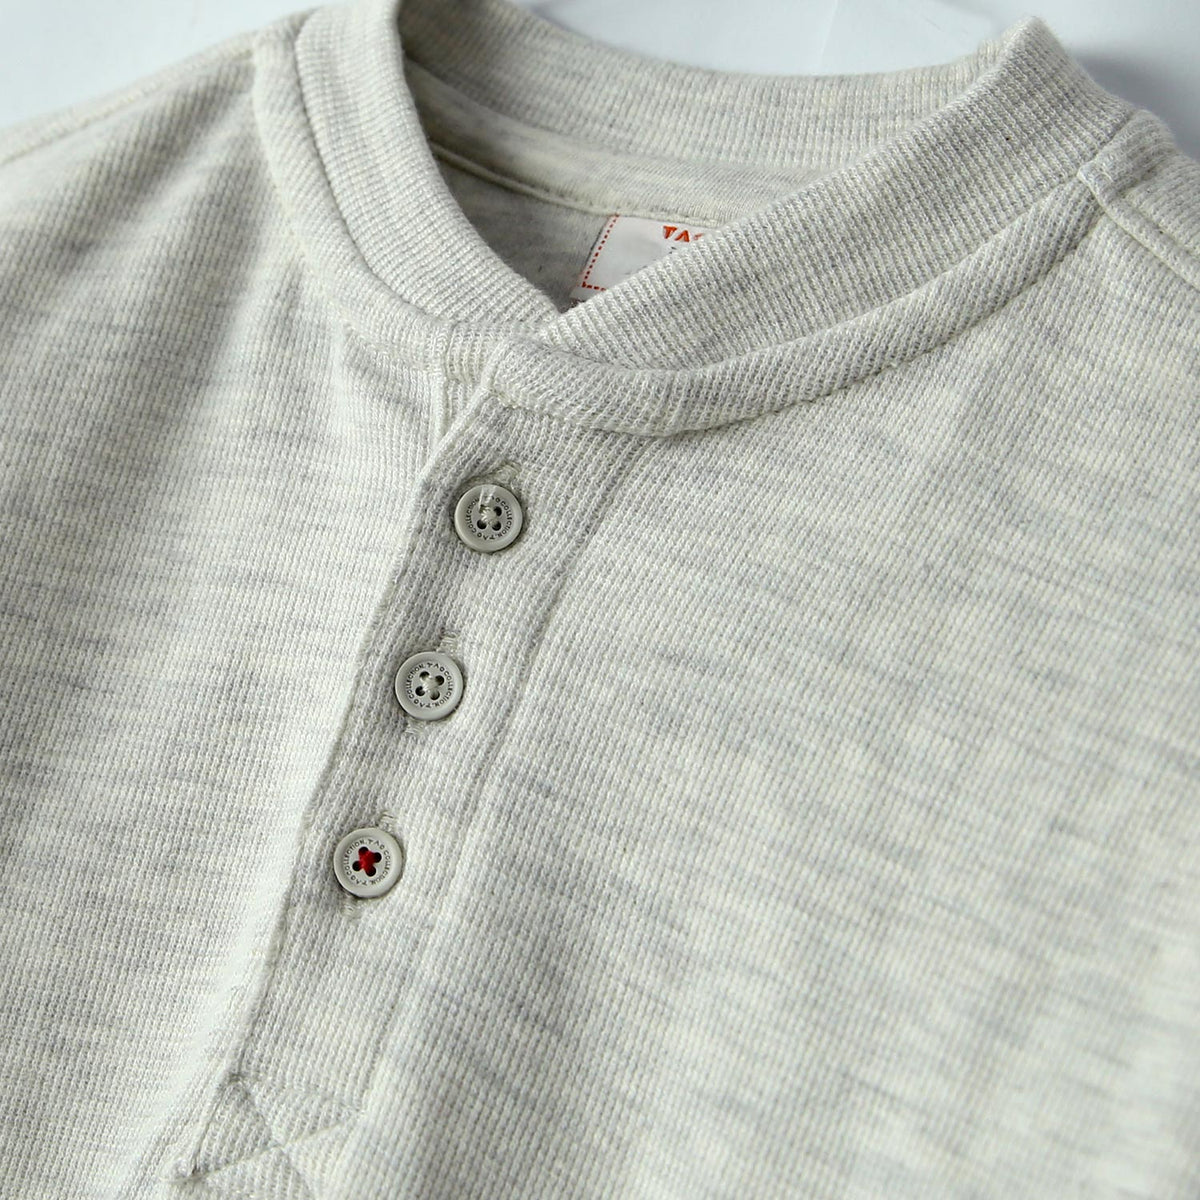 Premium Quality Soft Cotton Long Sleeve Henley Sweatshirt